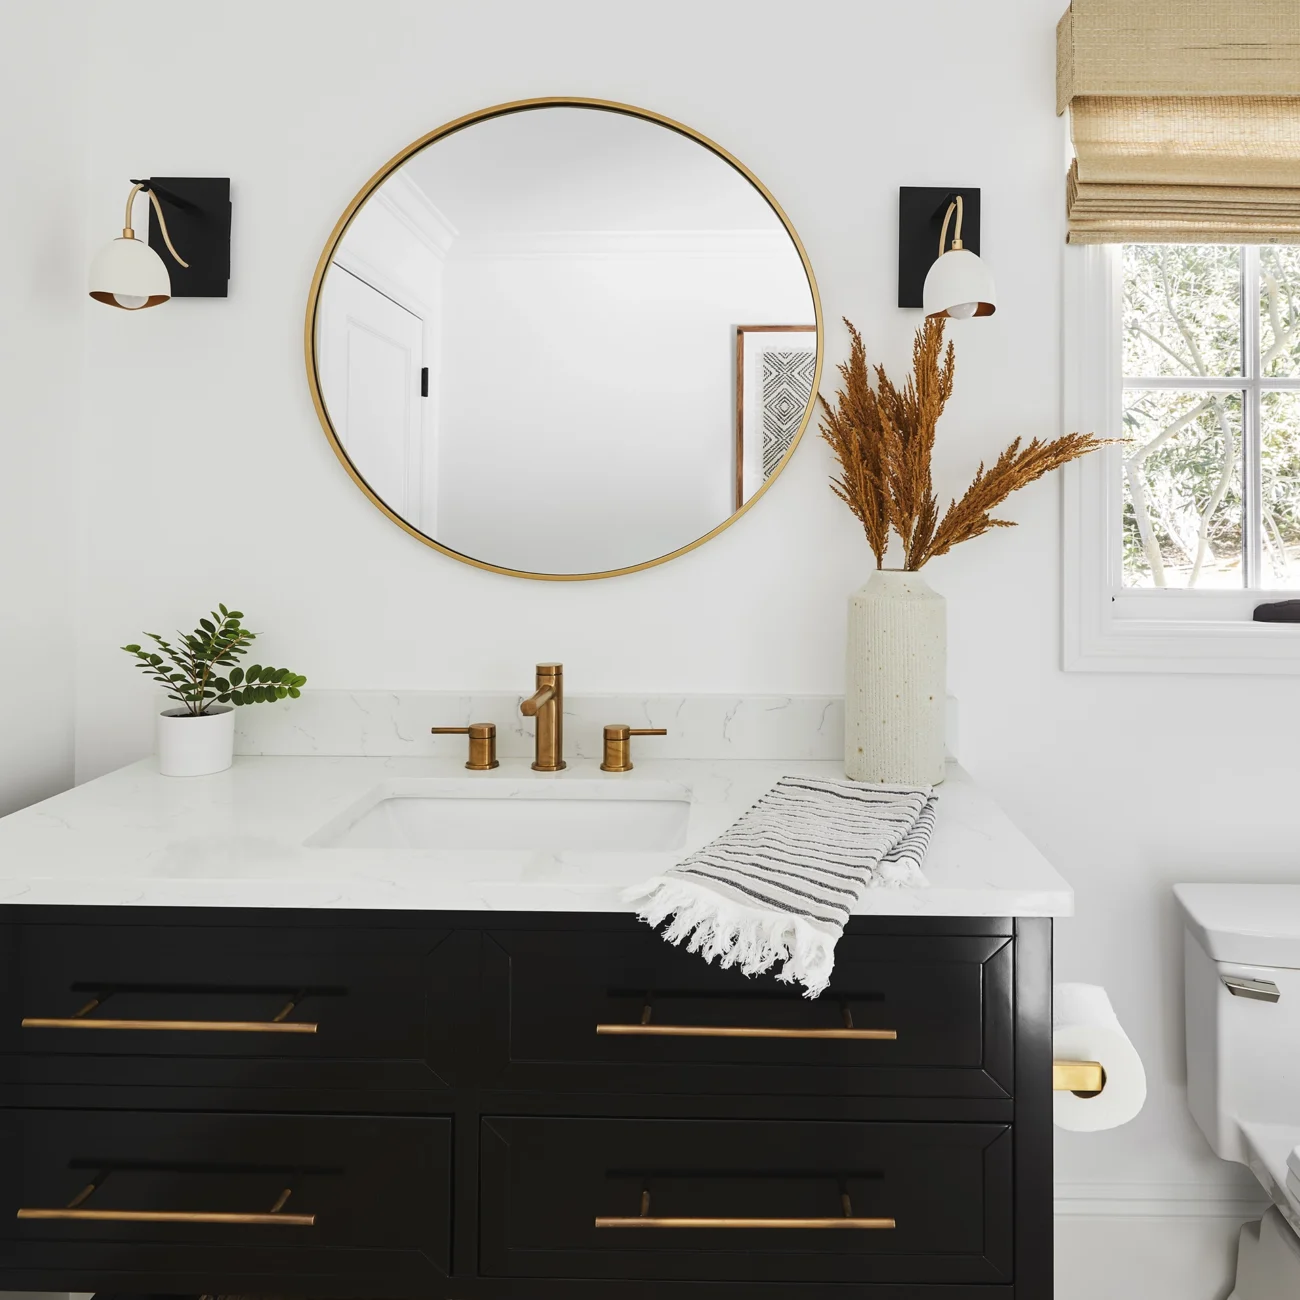 Christine Vroom Interiors | Via Almar | Costal bathroom with gold accents and black vanity